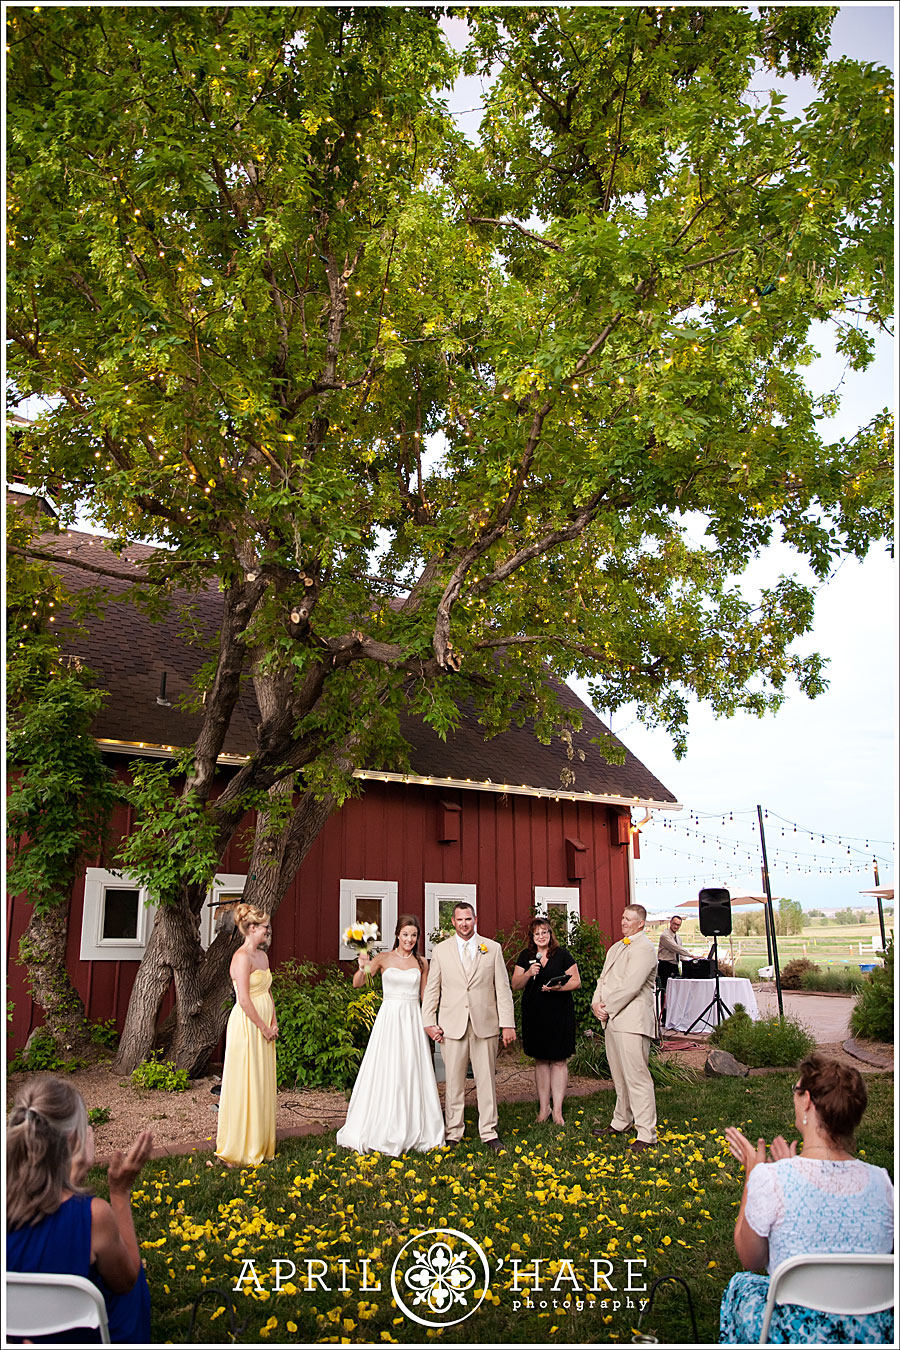 Beautiful Yellow Themed Wedding at Dusk on a Farm in Colorado